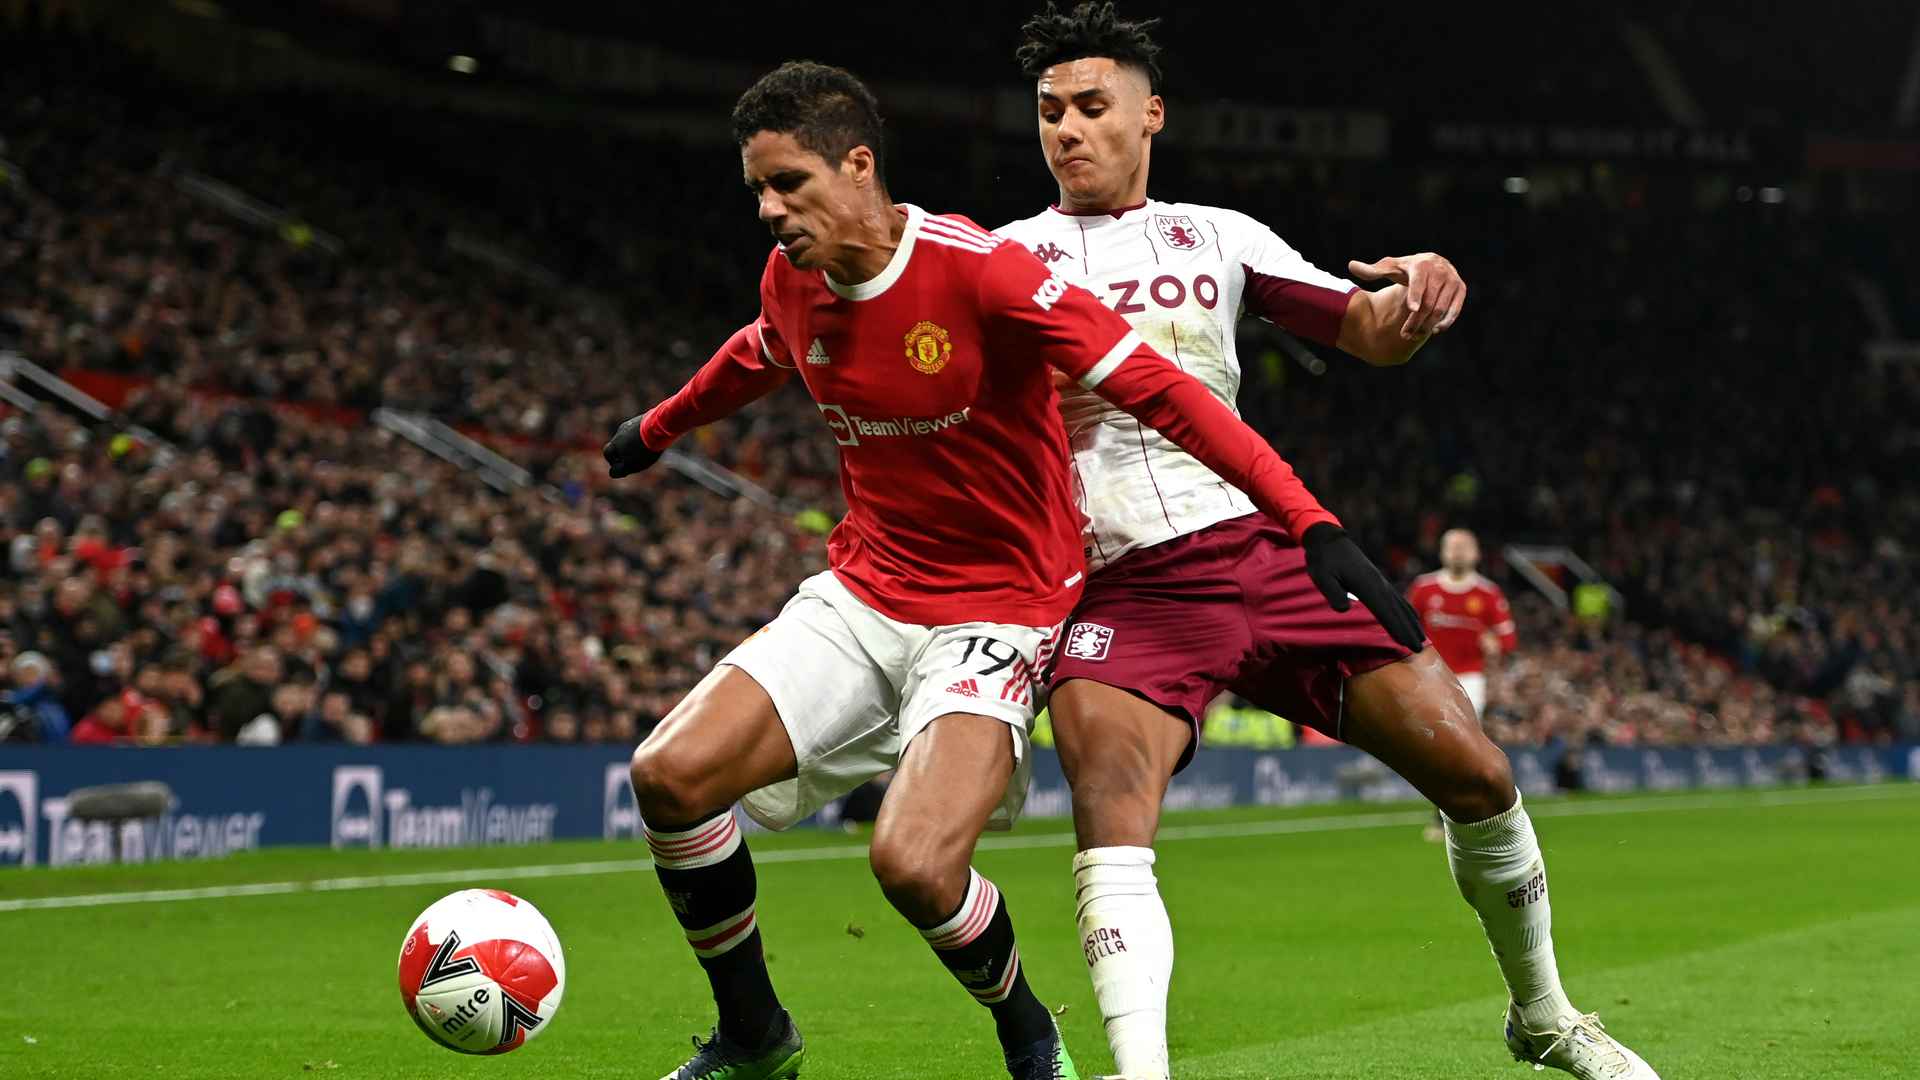               Manchester United defender targets fresh start under Erik ten Hag